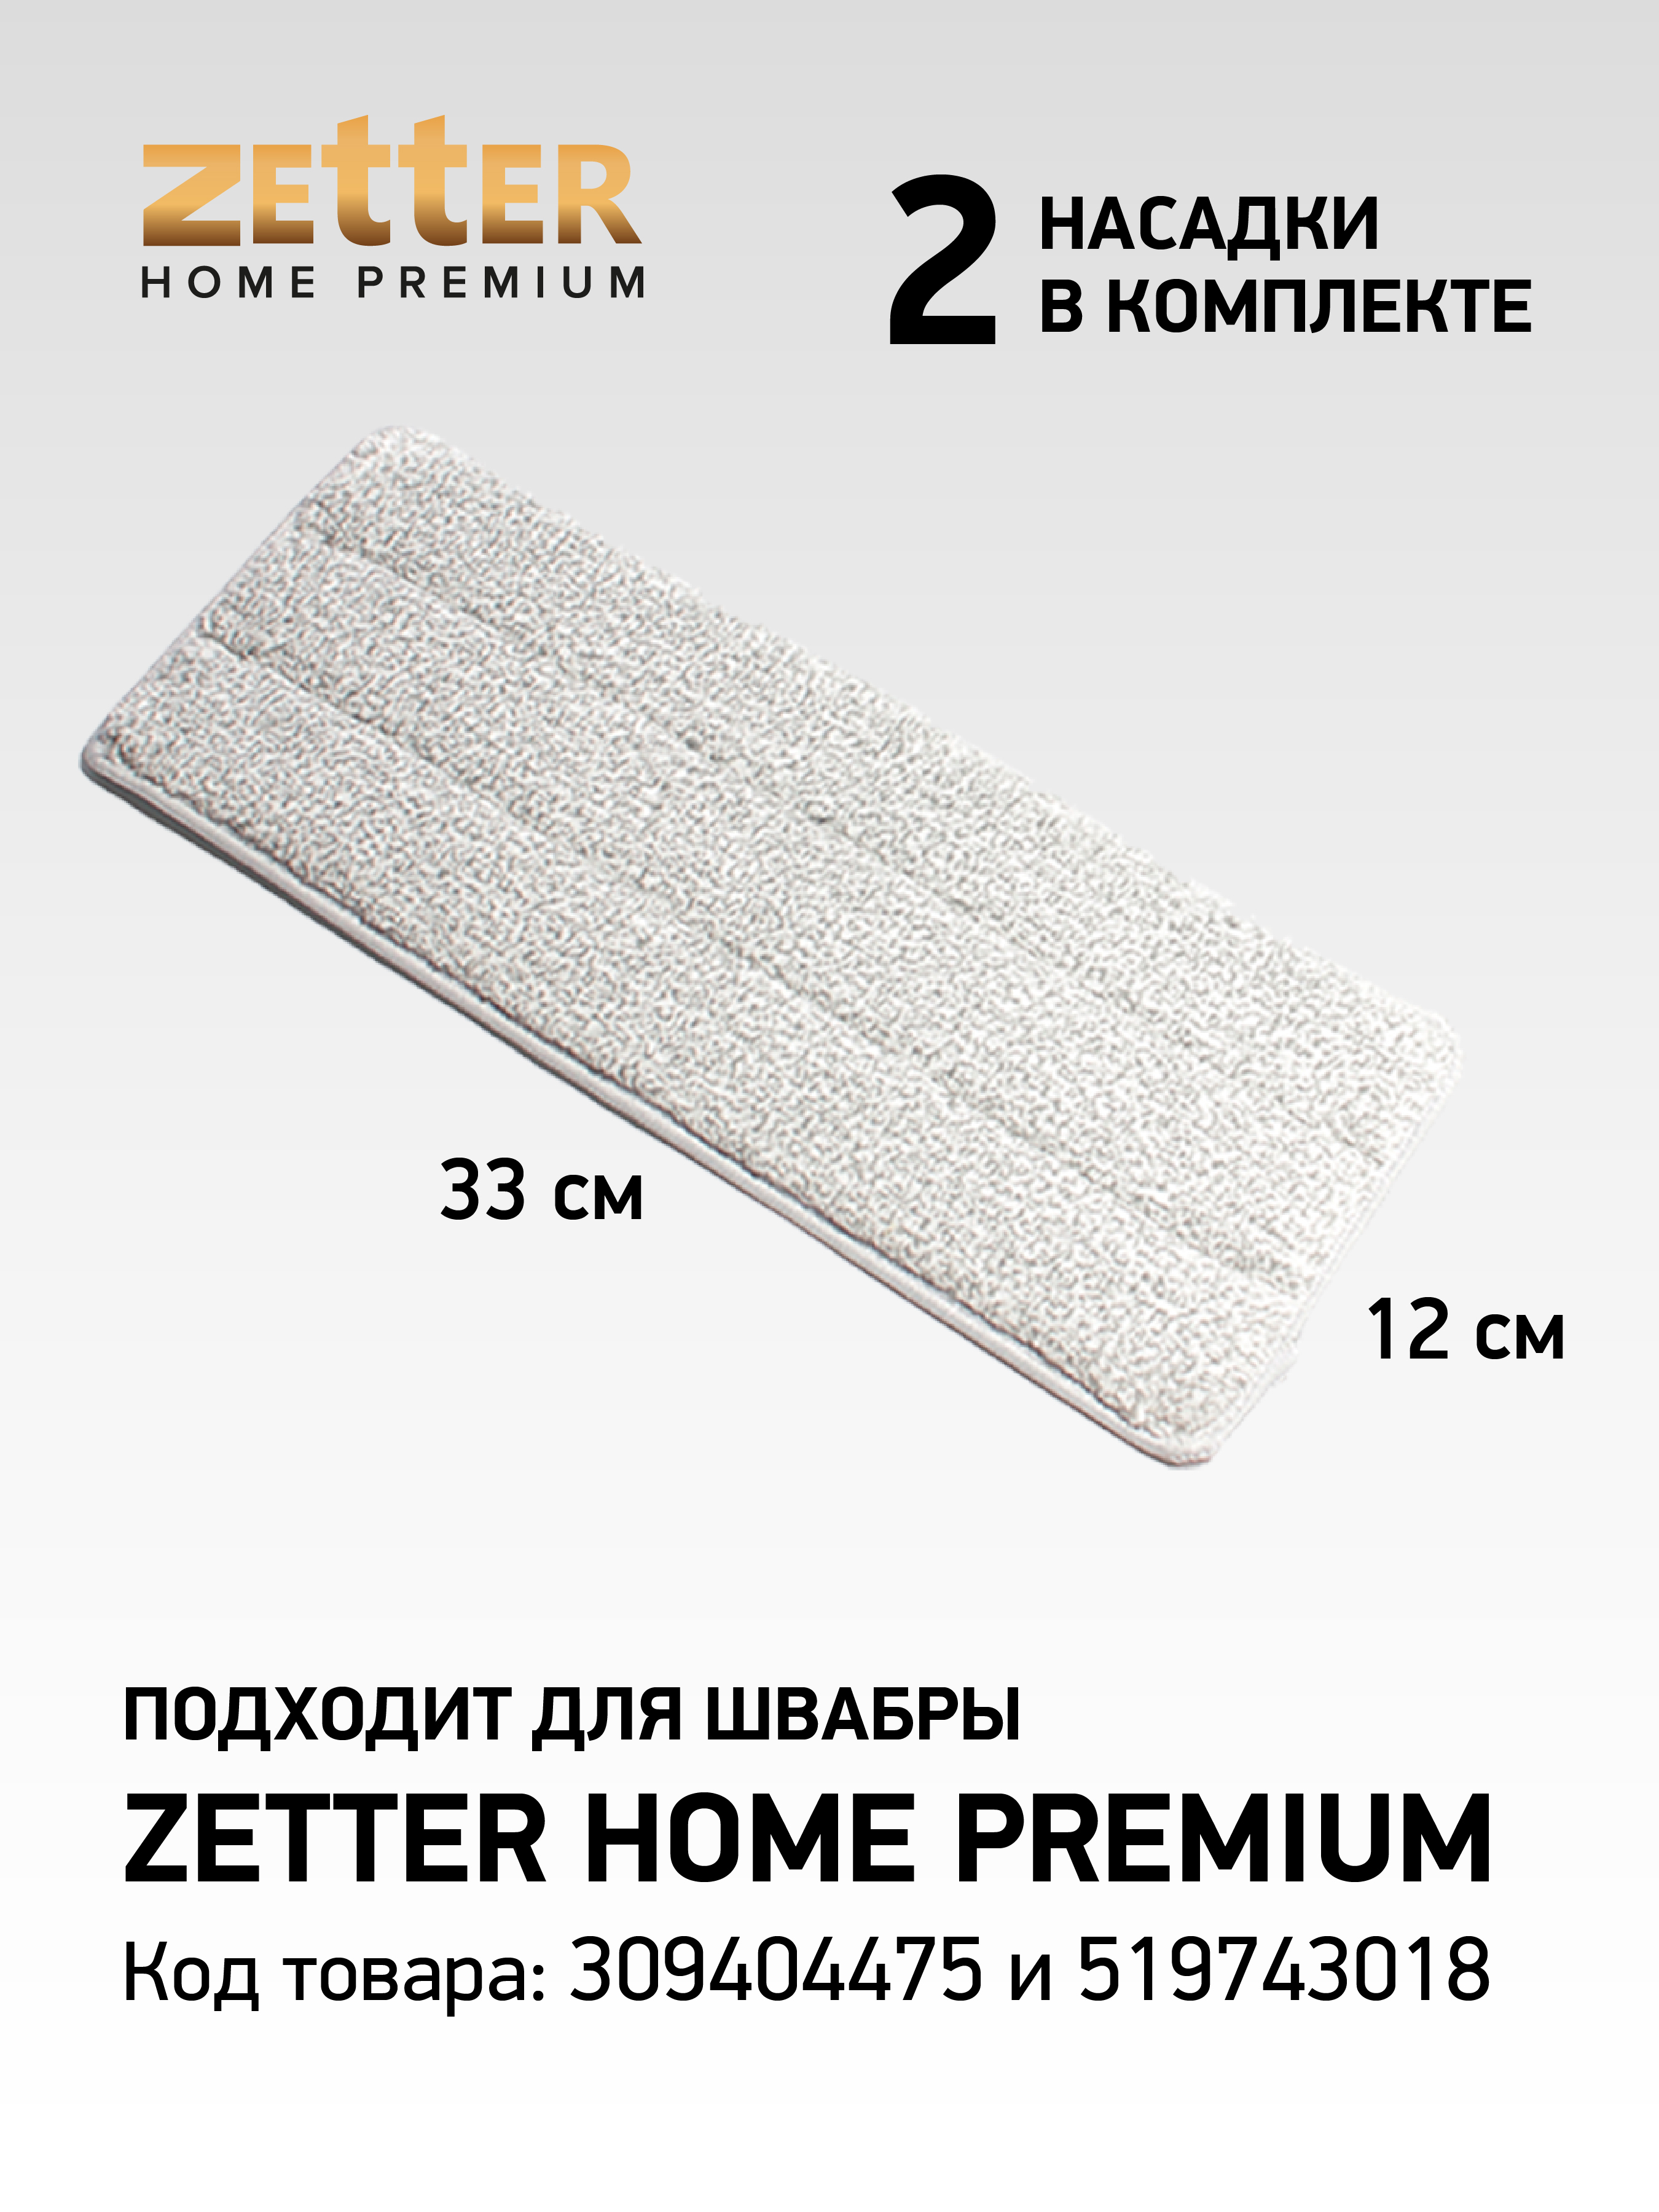 Швабра Zetter Premium. Насадка сменная швабре 6623 XY. Комплект насадок для швабры Zetter Premium, микрофибра, 2 шт.. Насадки на швабру Deko dkfm01, 3шт. Zetter m купить